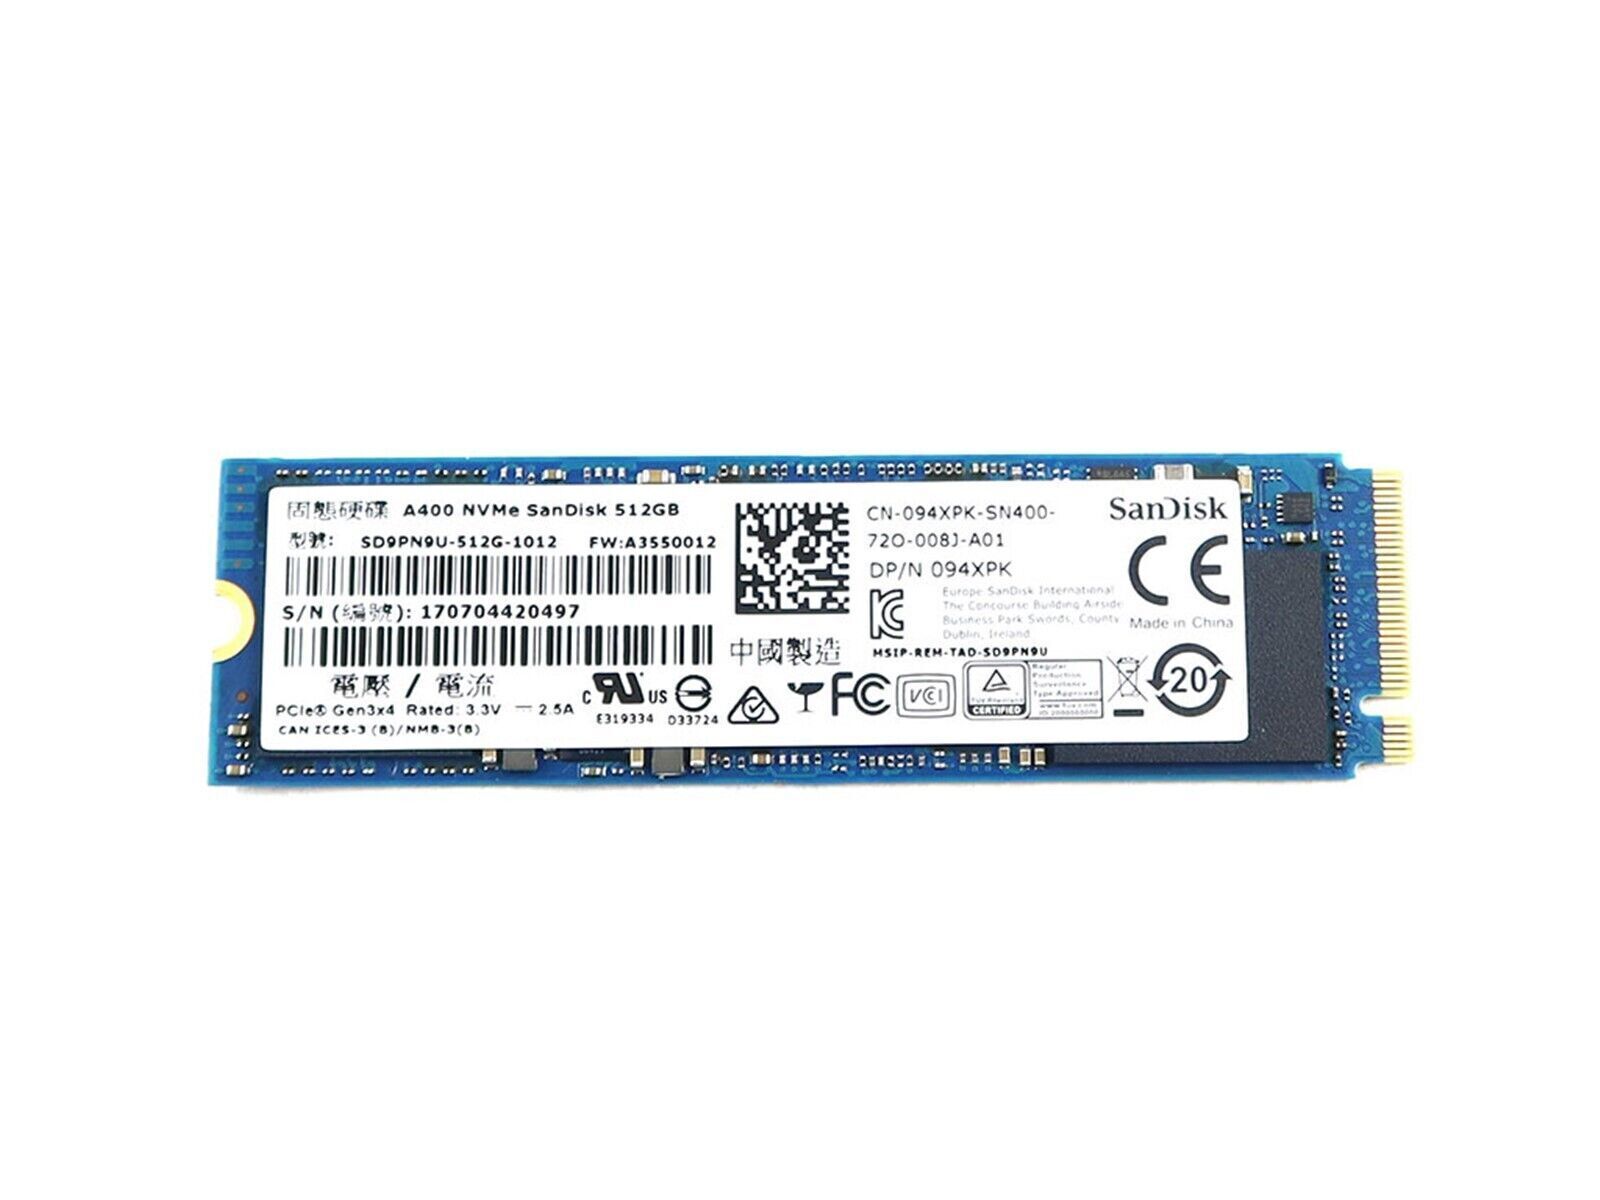 GENUINE SanDisk SSD M.2 2280 NVMe 512GB - PCIe Gen3x4 A400 094XPK